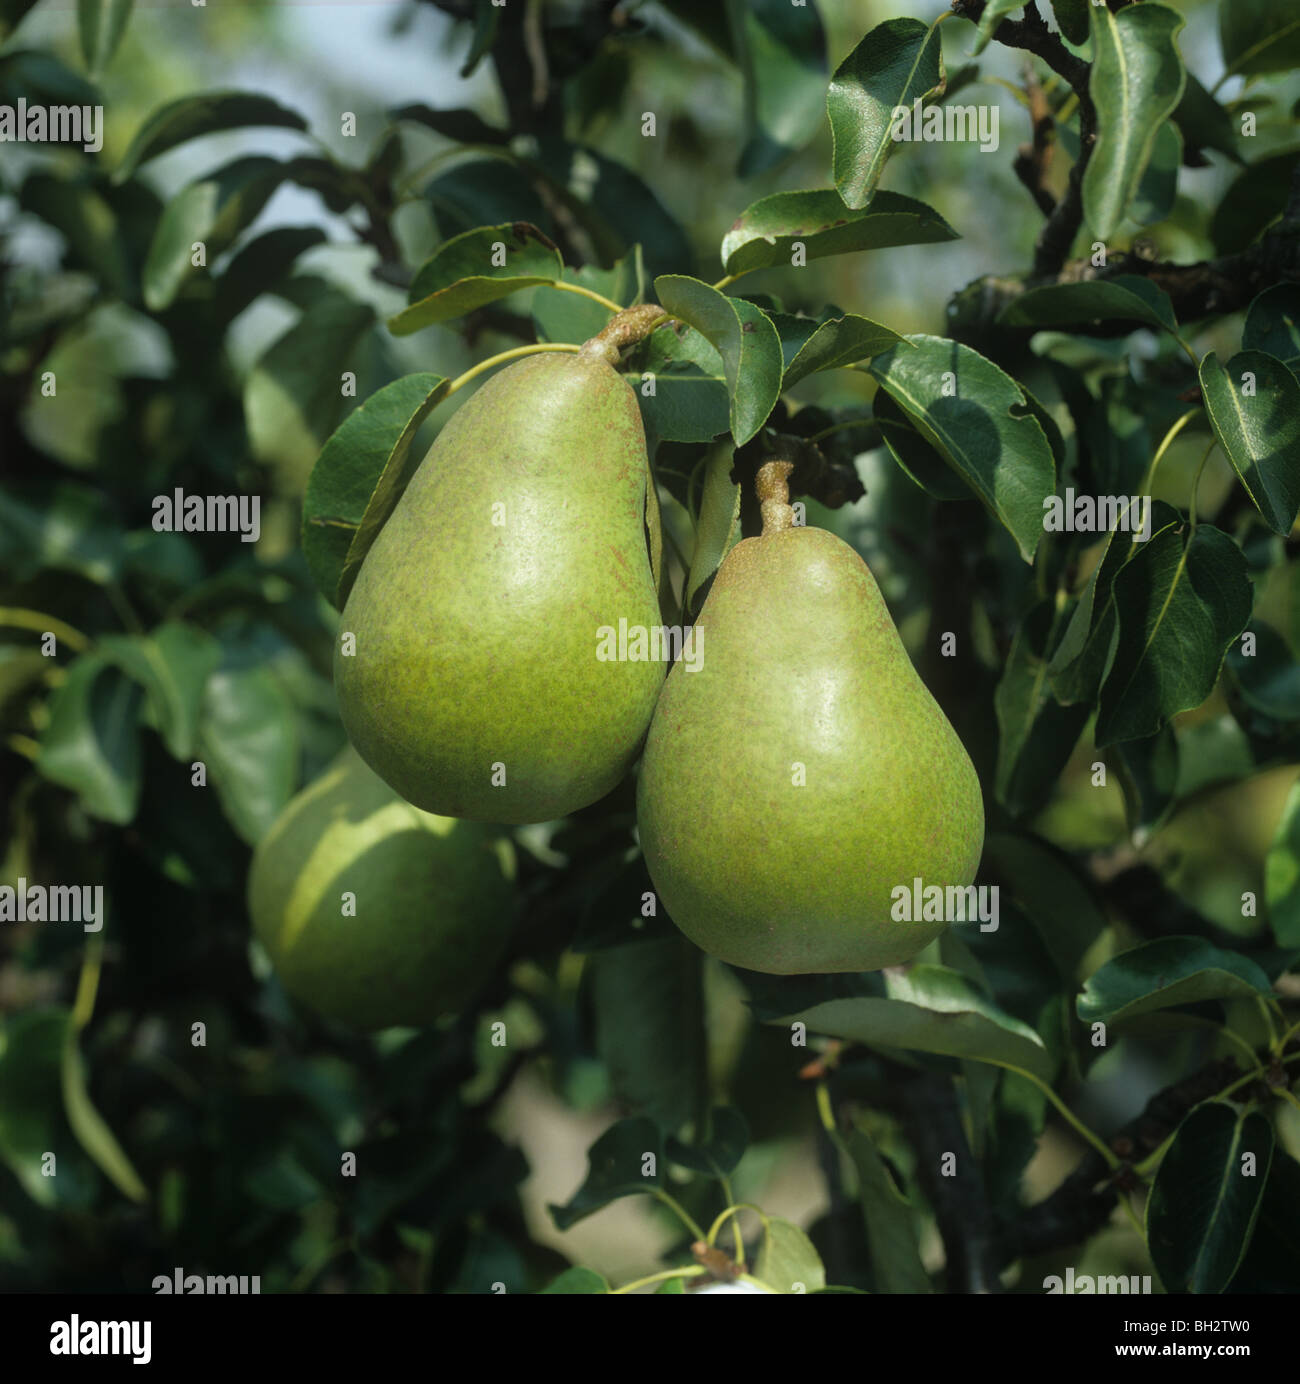 Mature Doyenne du Comice pear fruits on the tree, Oxfordshire Stock Photo